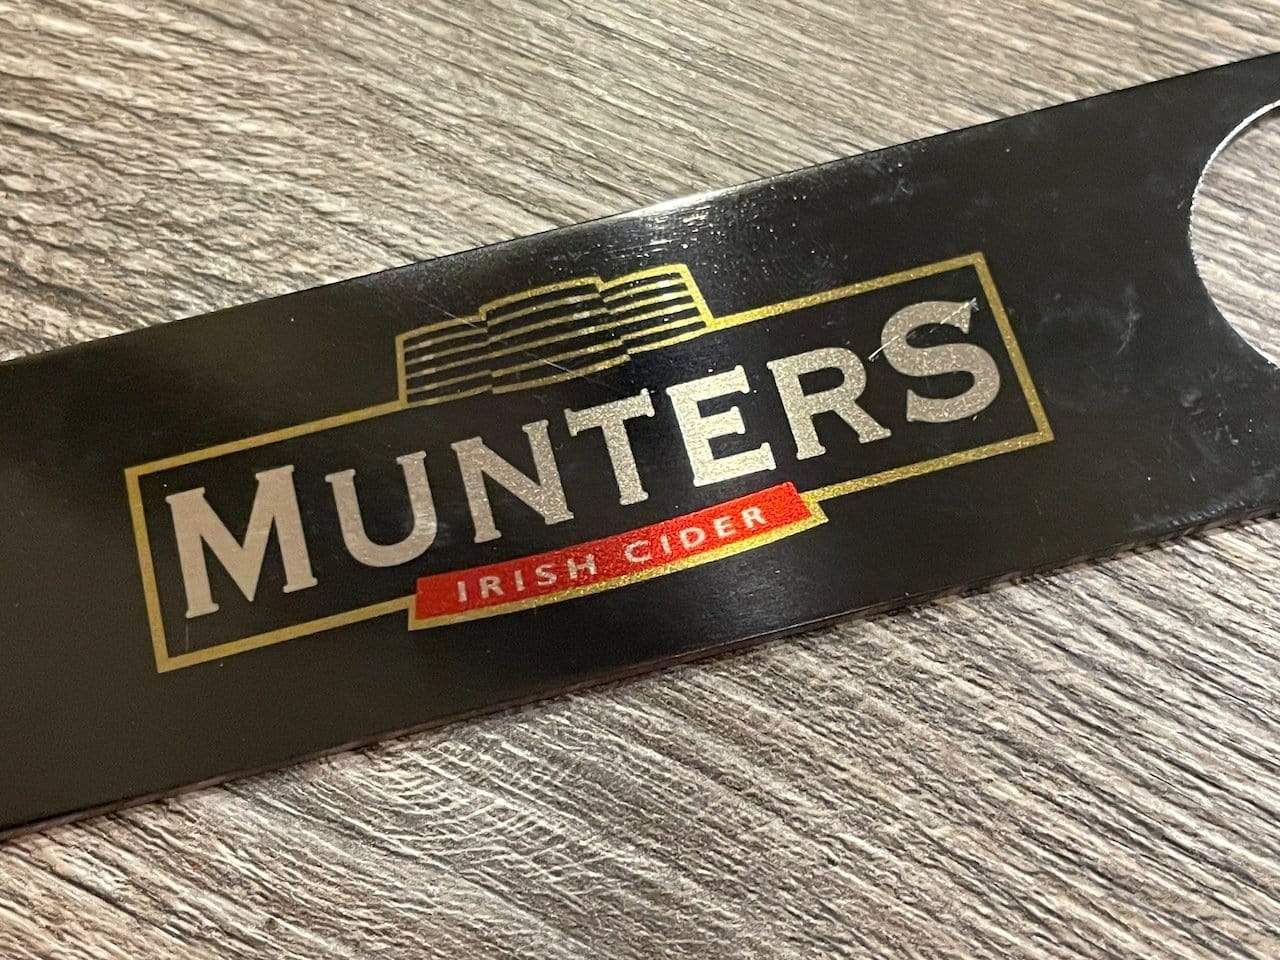 Munters Bottle Opener Raise the Bar Print and Design - Raise the Bar